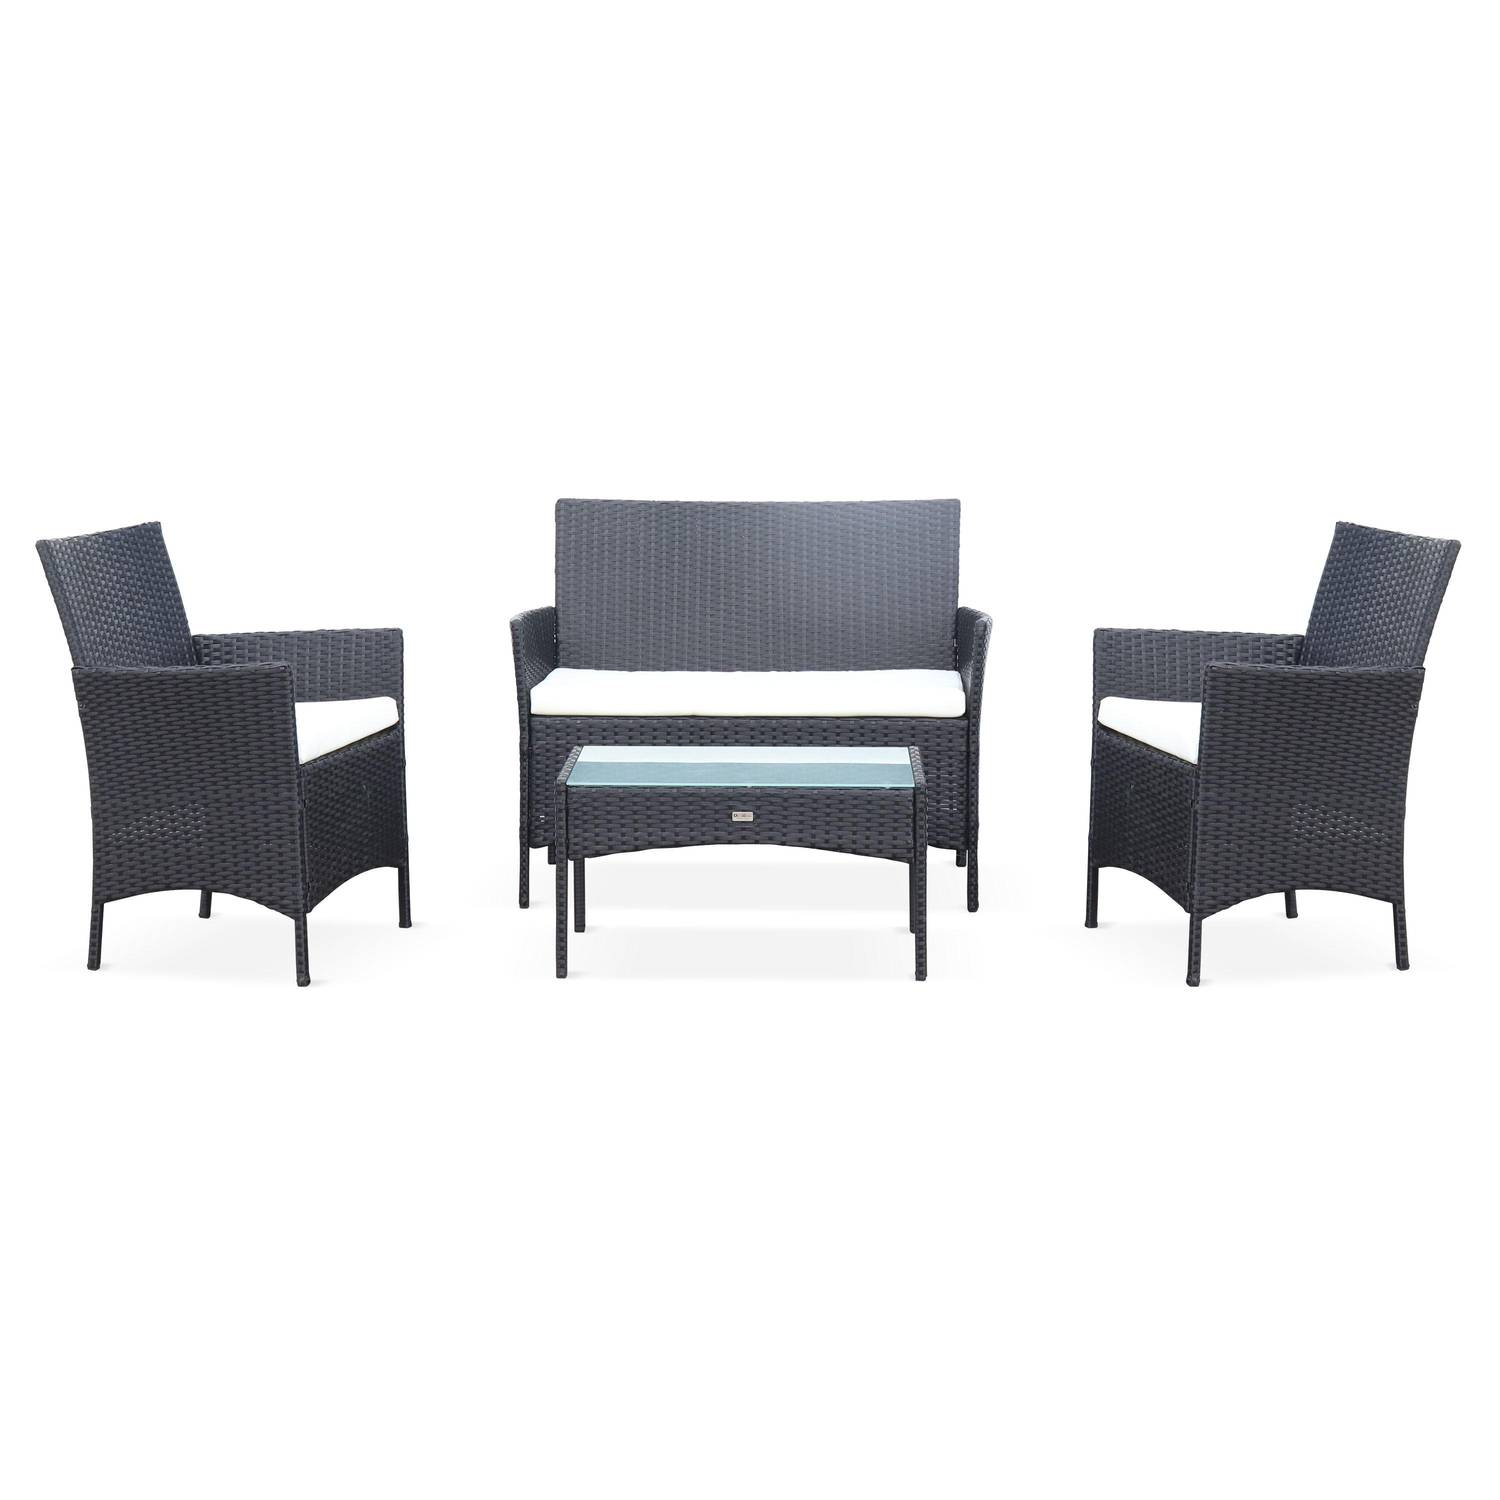 4-seater polyrattan garden sofa set - sofa, 2 armchairs, coffee table - Moltes - Black rattan, Off-white cushions Photo6